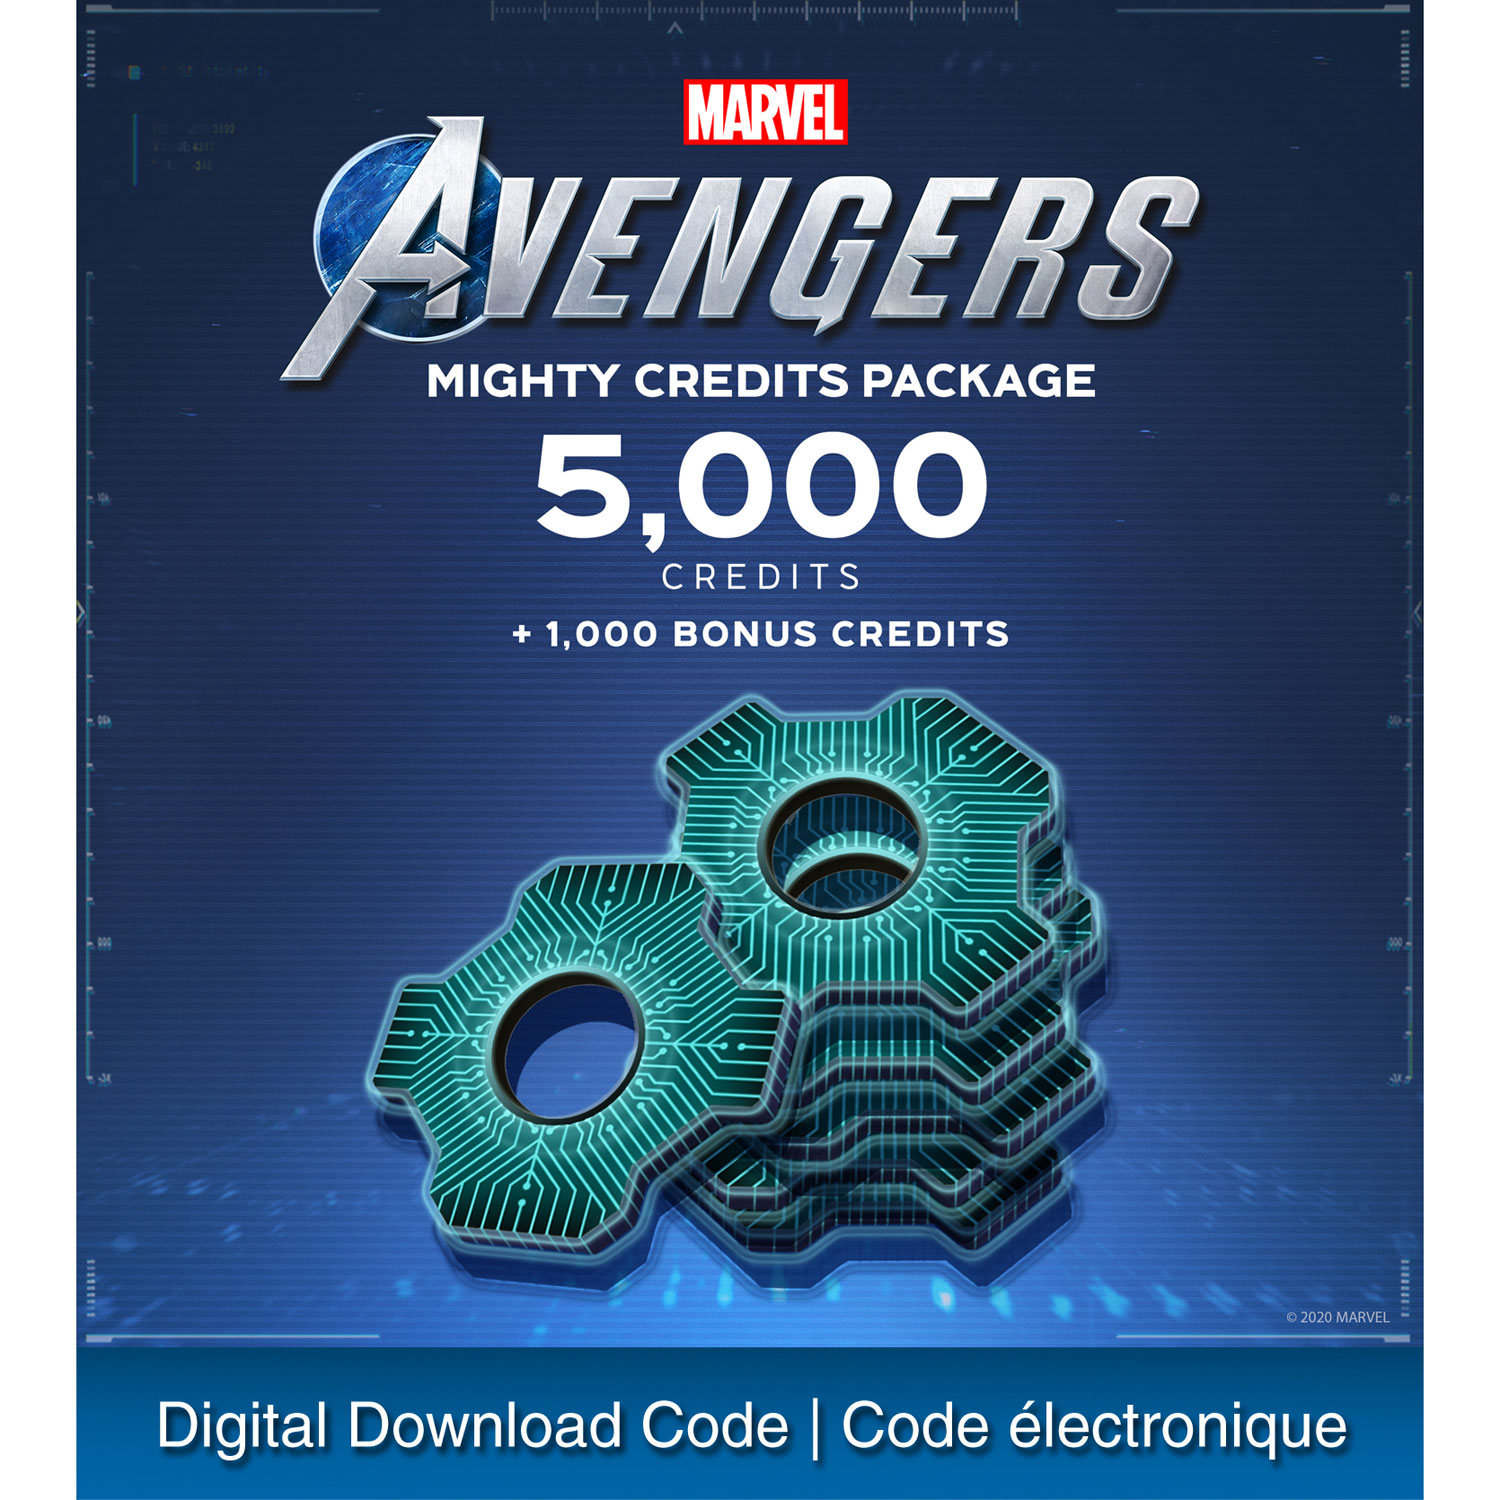 marvel avengers ps4 discount code